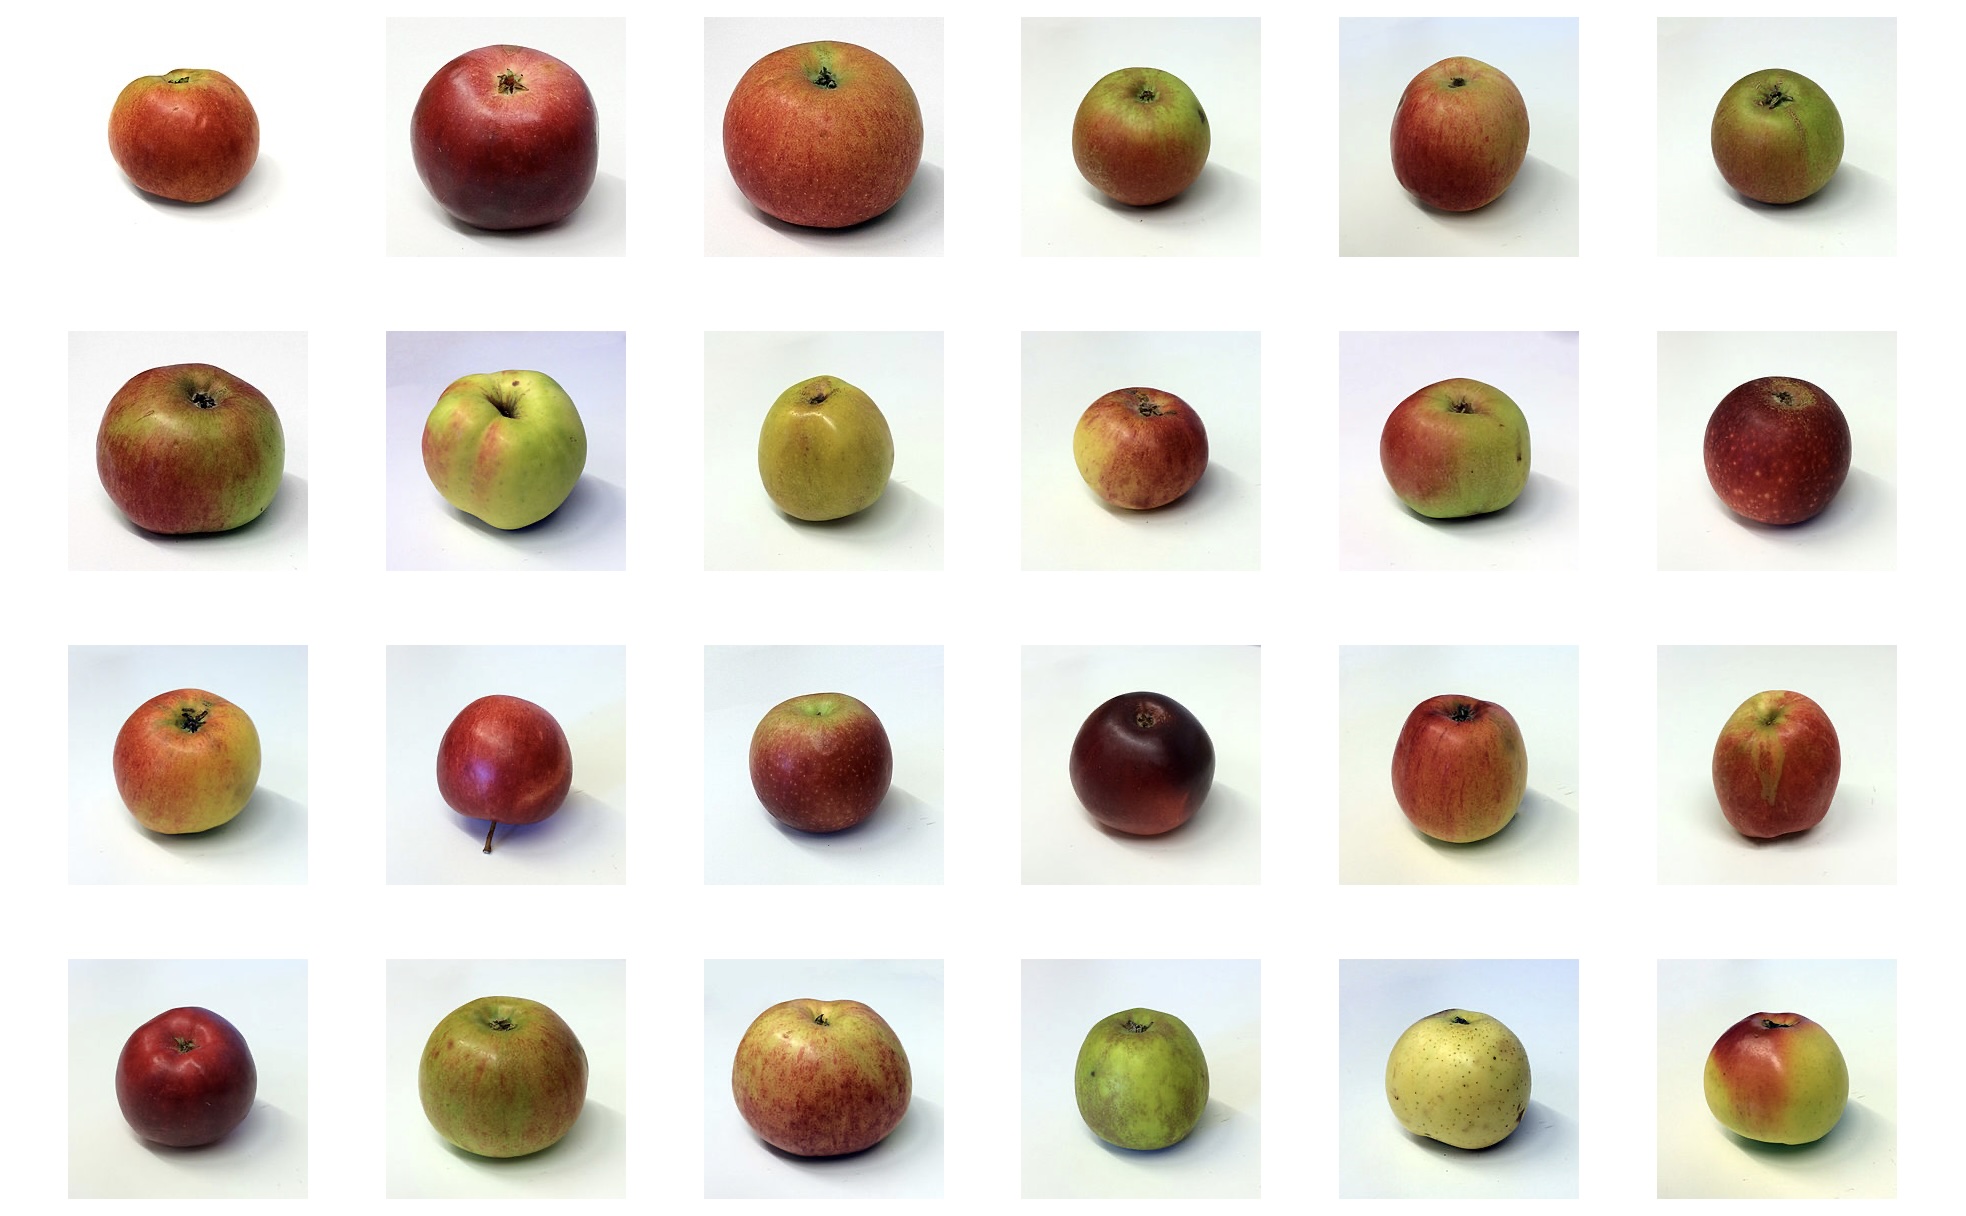 Apple Cultivars on Wikimedia Commons